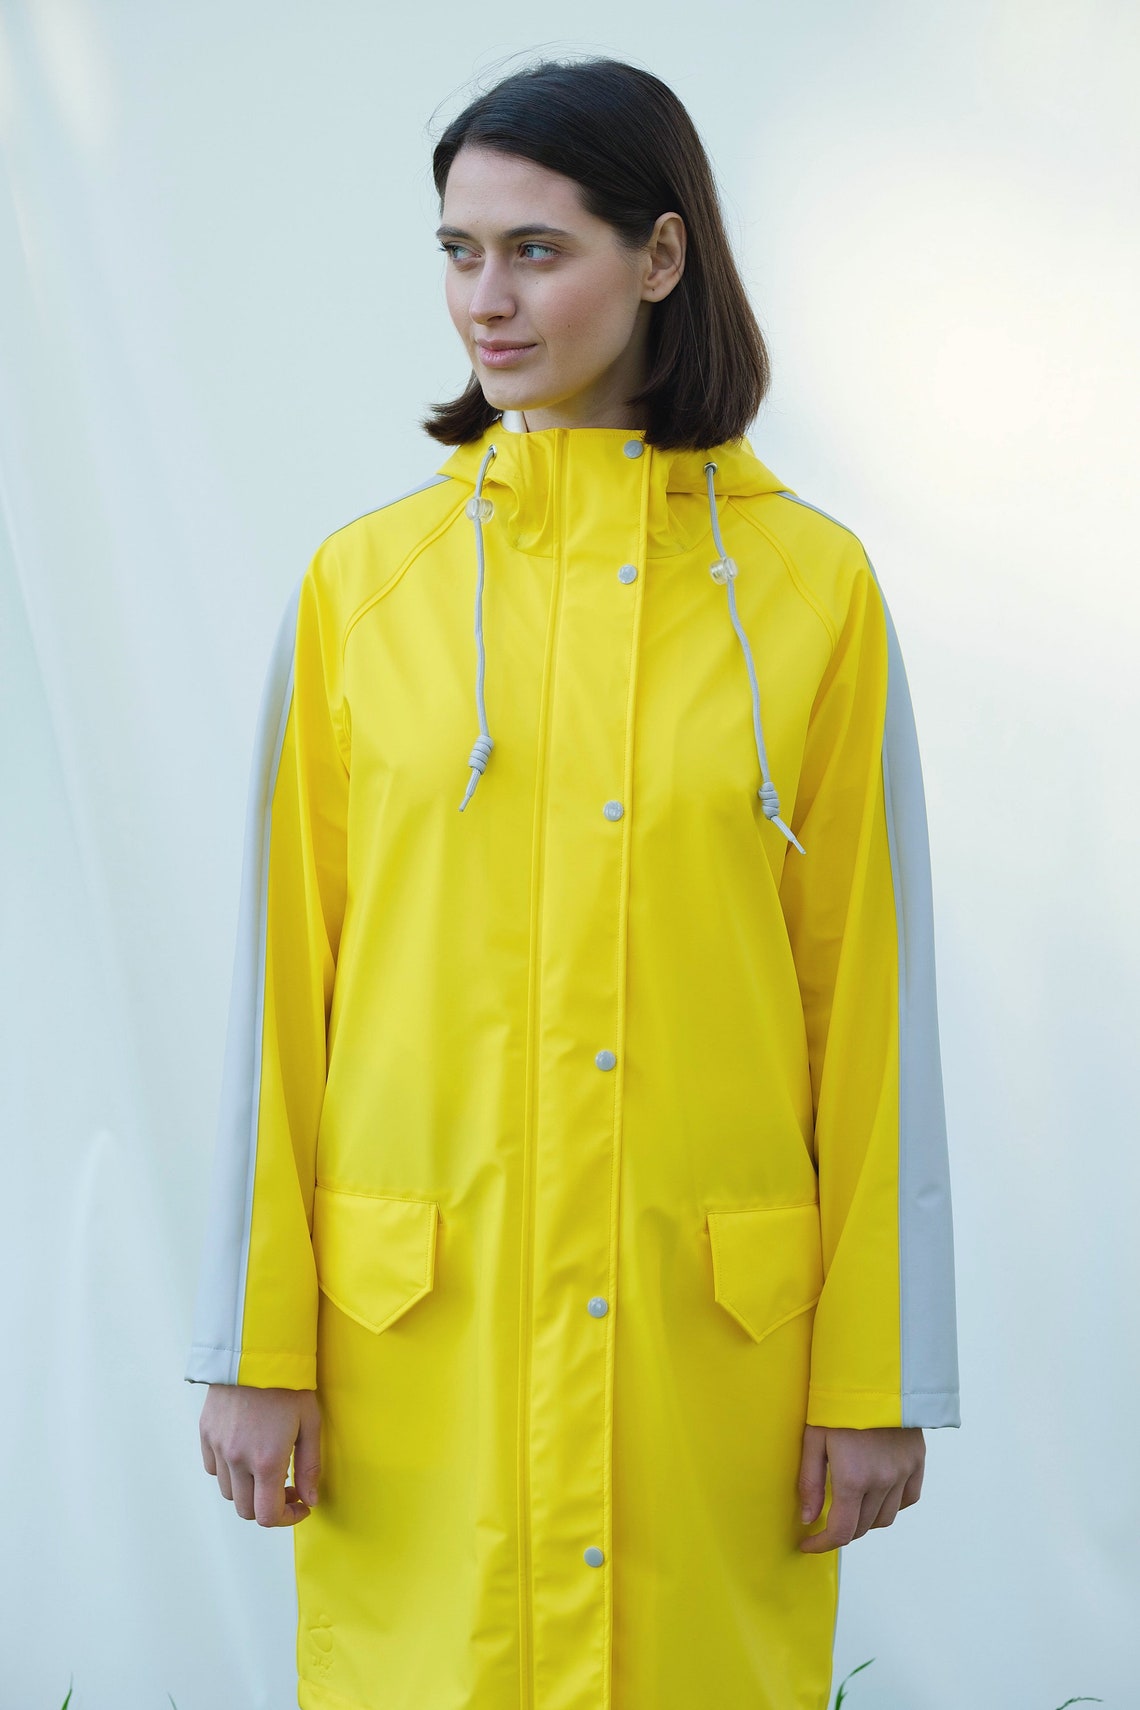 Women raincoat Colorblock yellow-grey. | Etsy